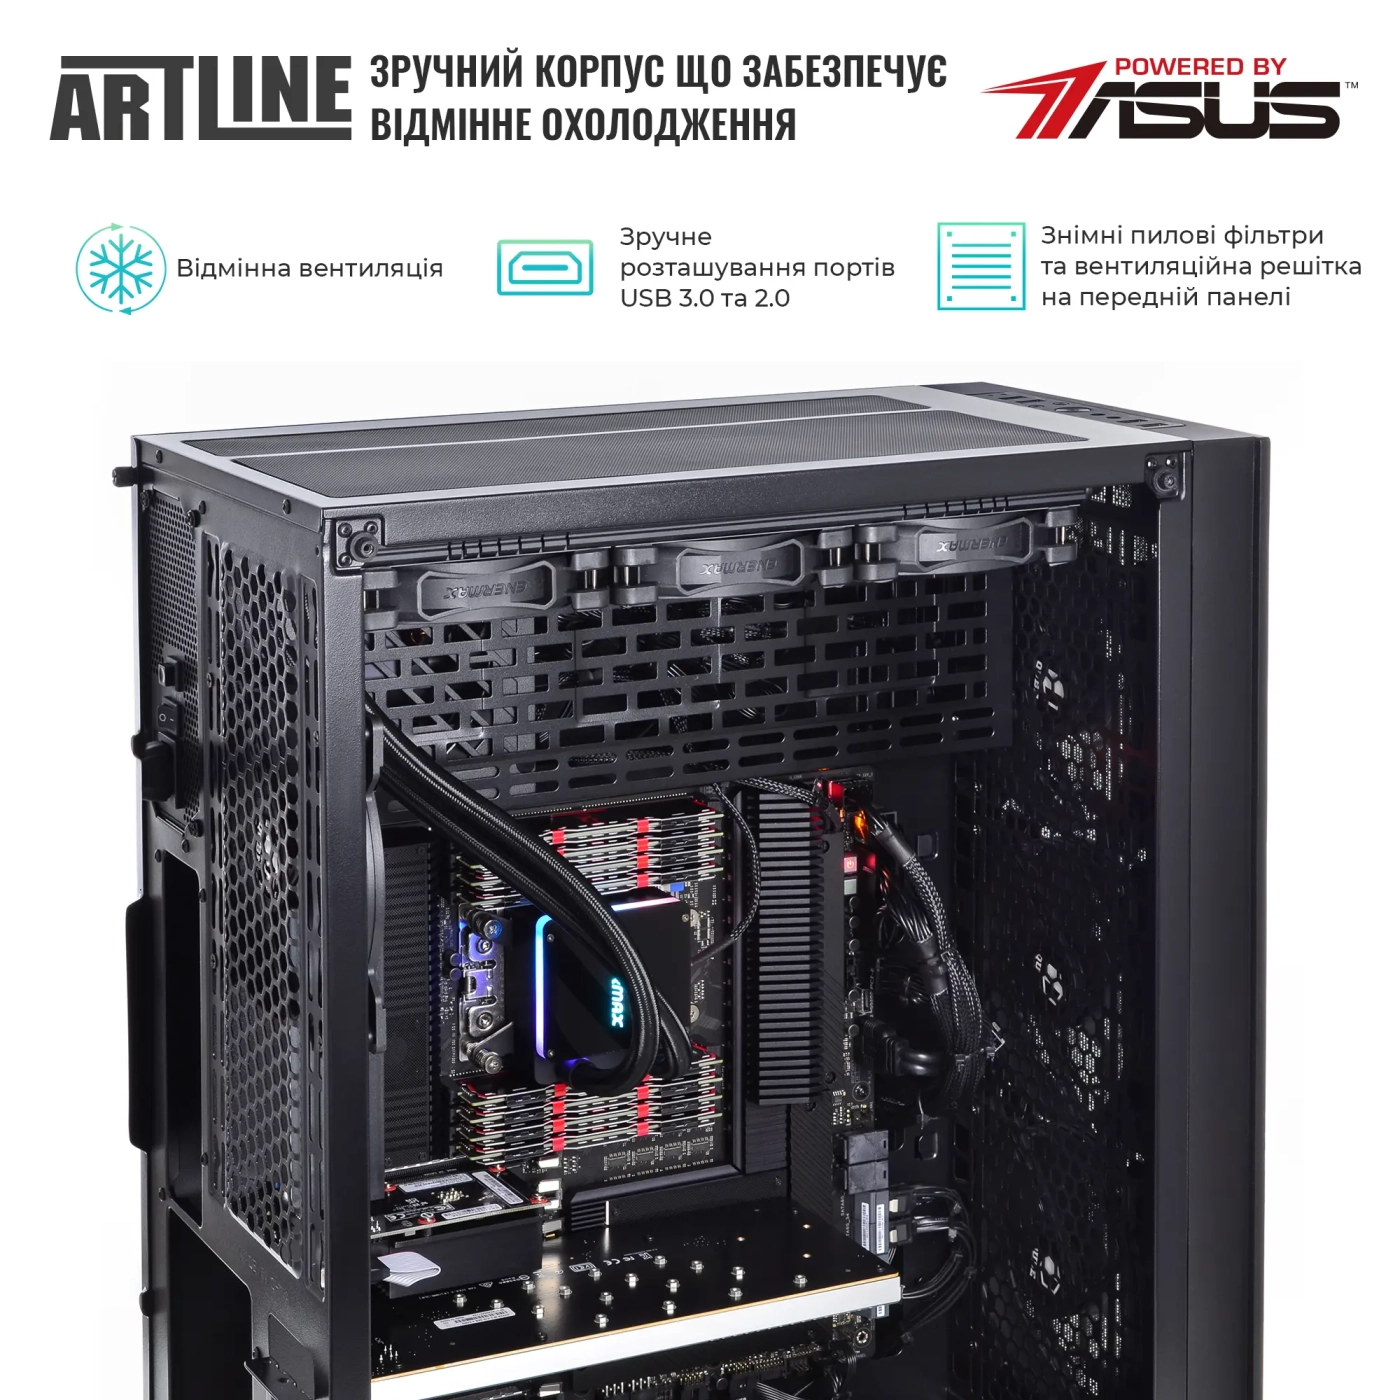 Купити Сервер ARTLINE Business T85v08 - фото 2